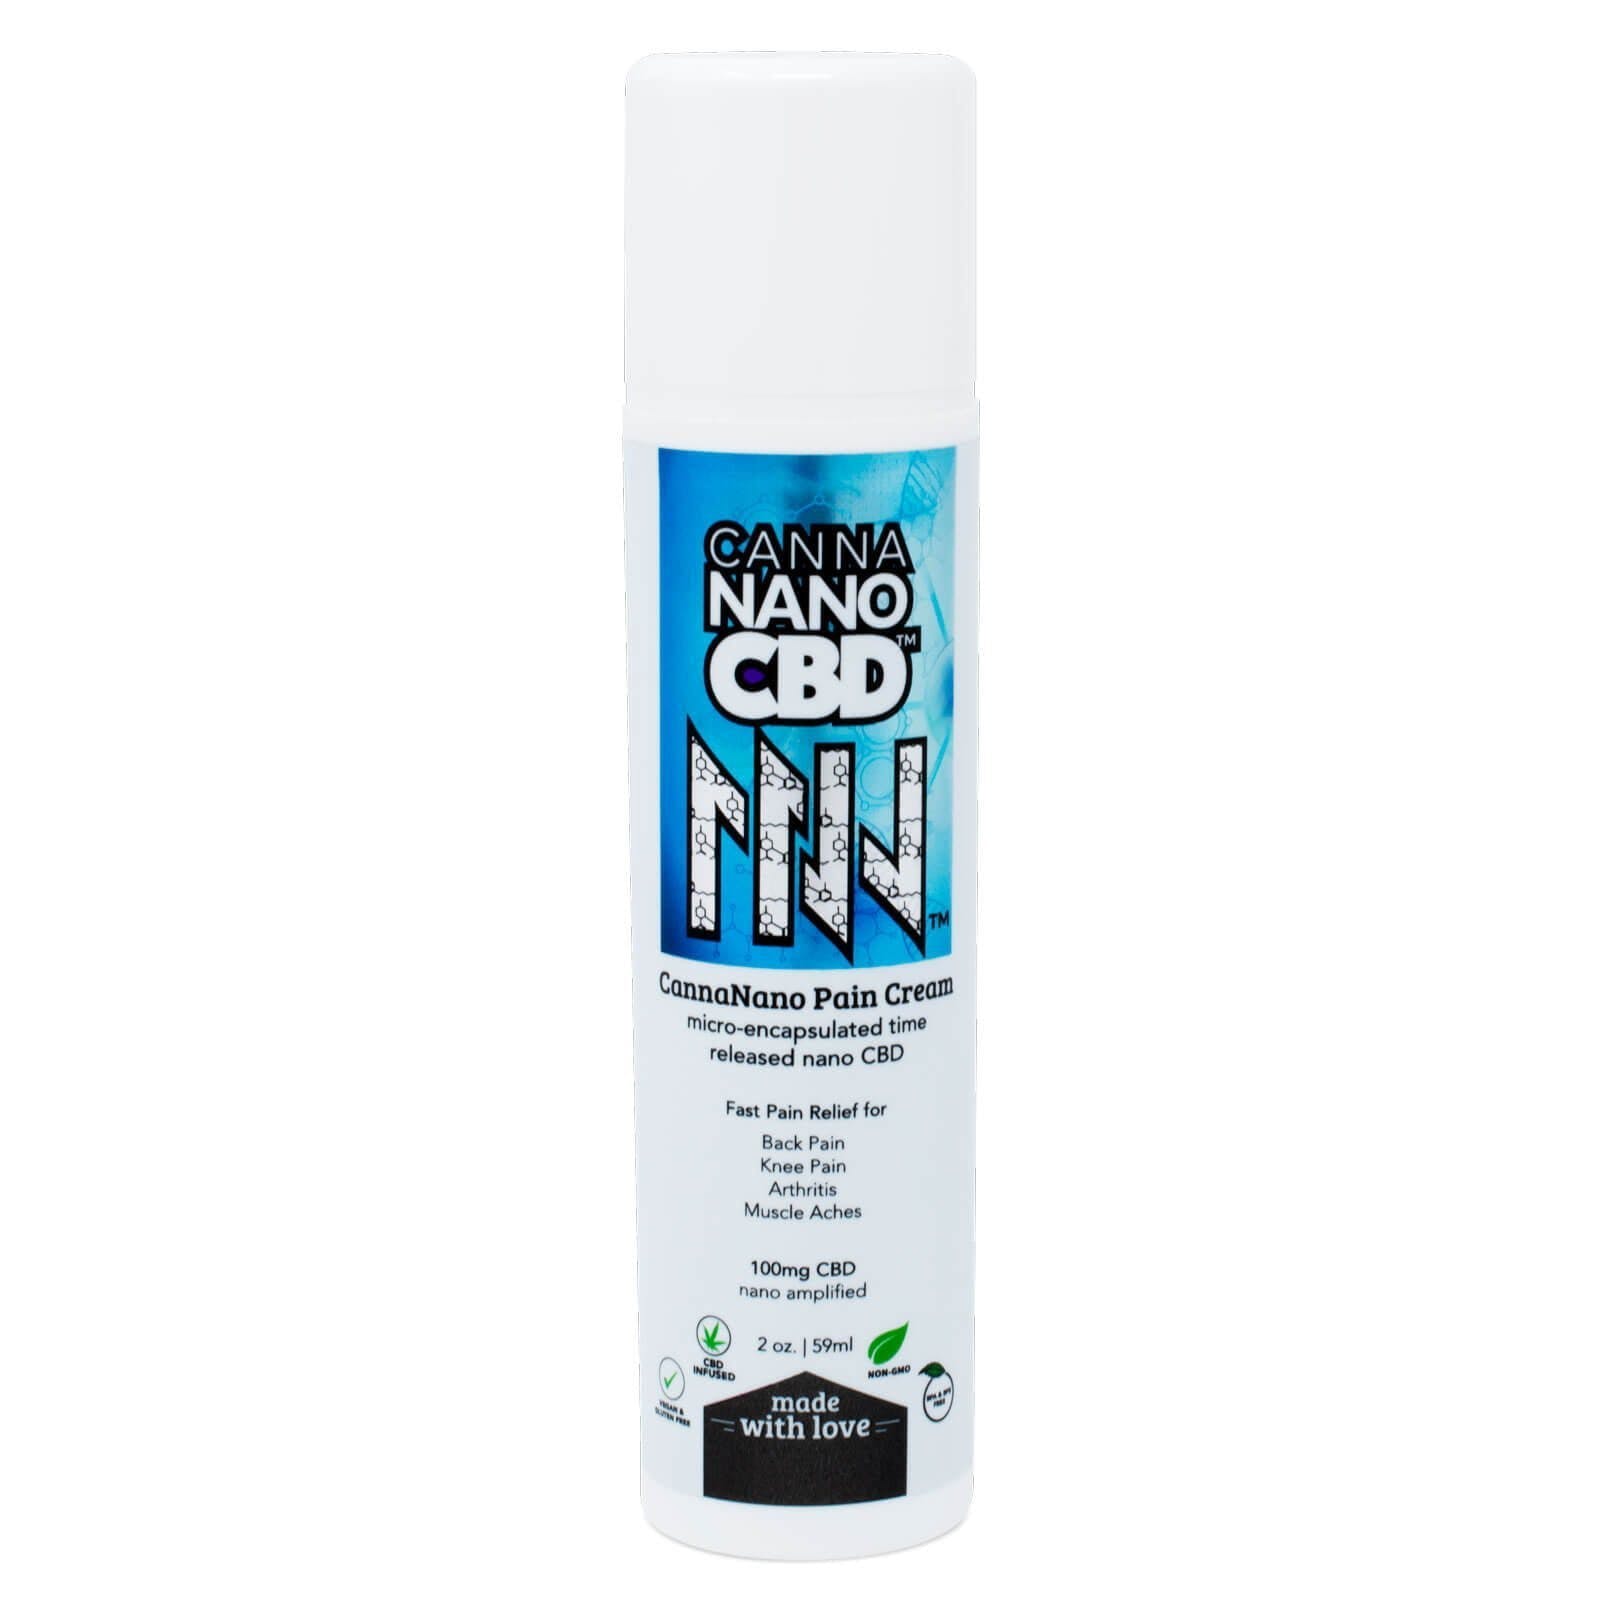 Canna nano CBD pain cream